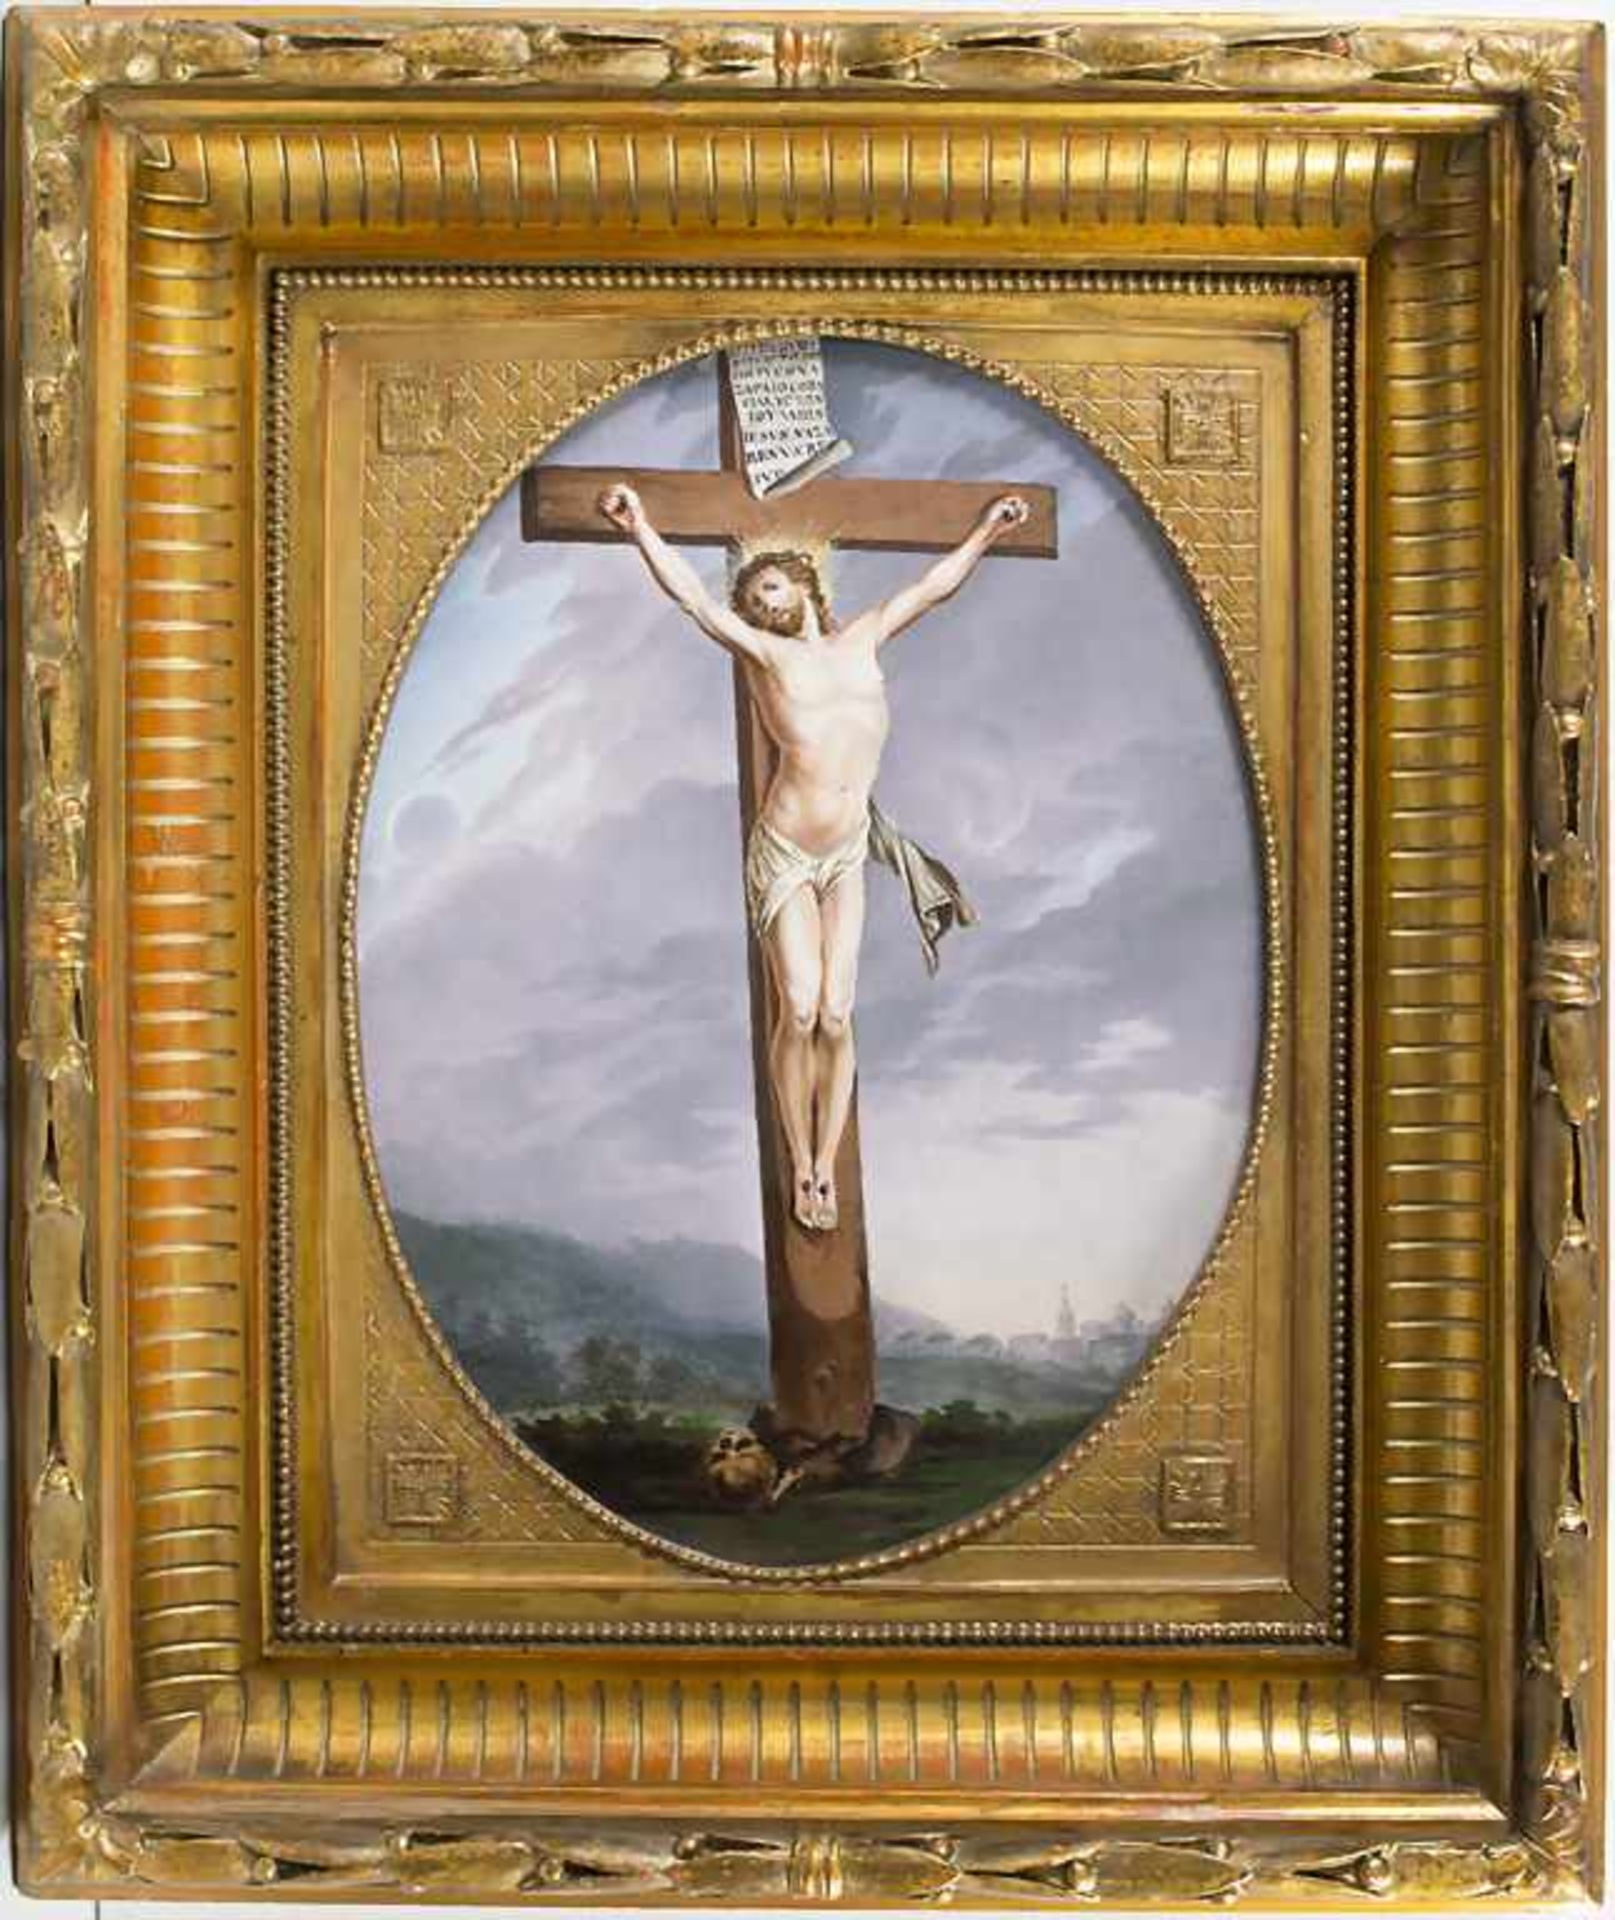 Porzellanbild 'Kreuzigung Christi' / A porcelain plate 'Crucifixion of Christ', Wiringer,